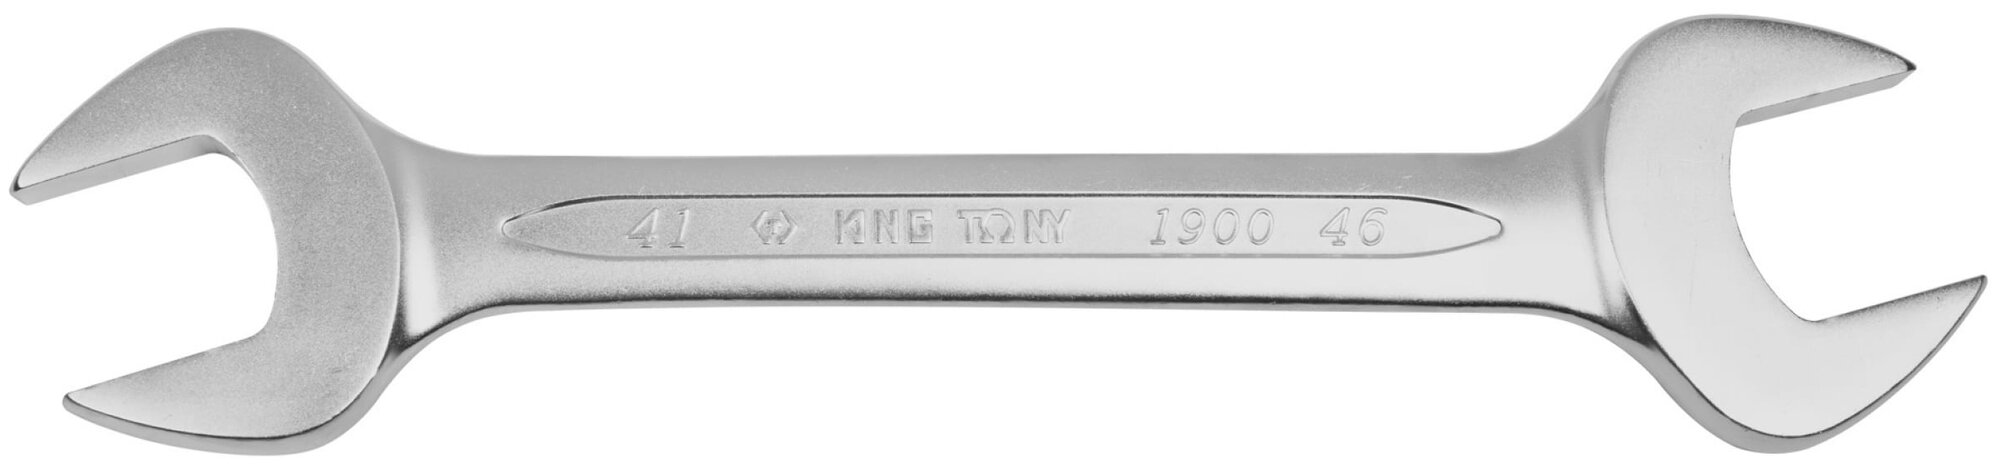 Ключ гаечный King tony - фото №1